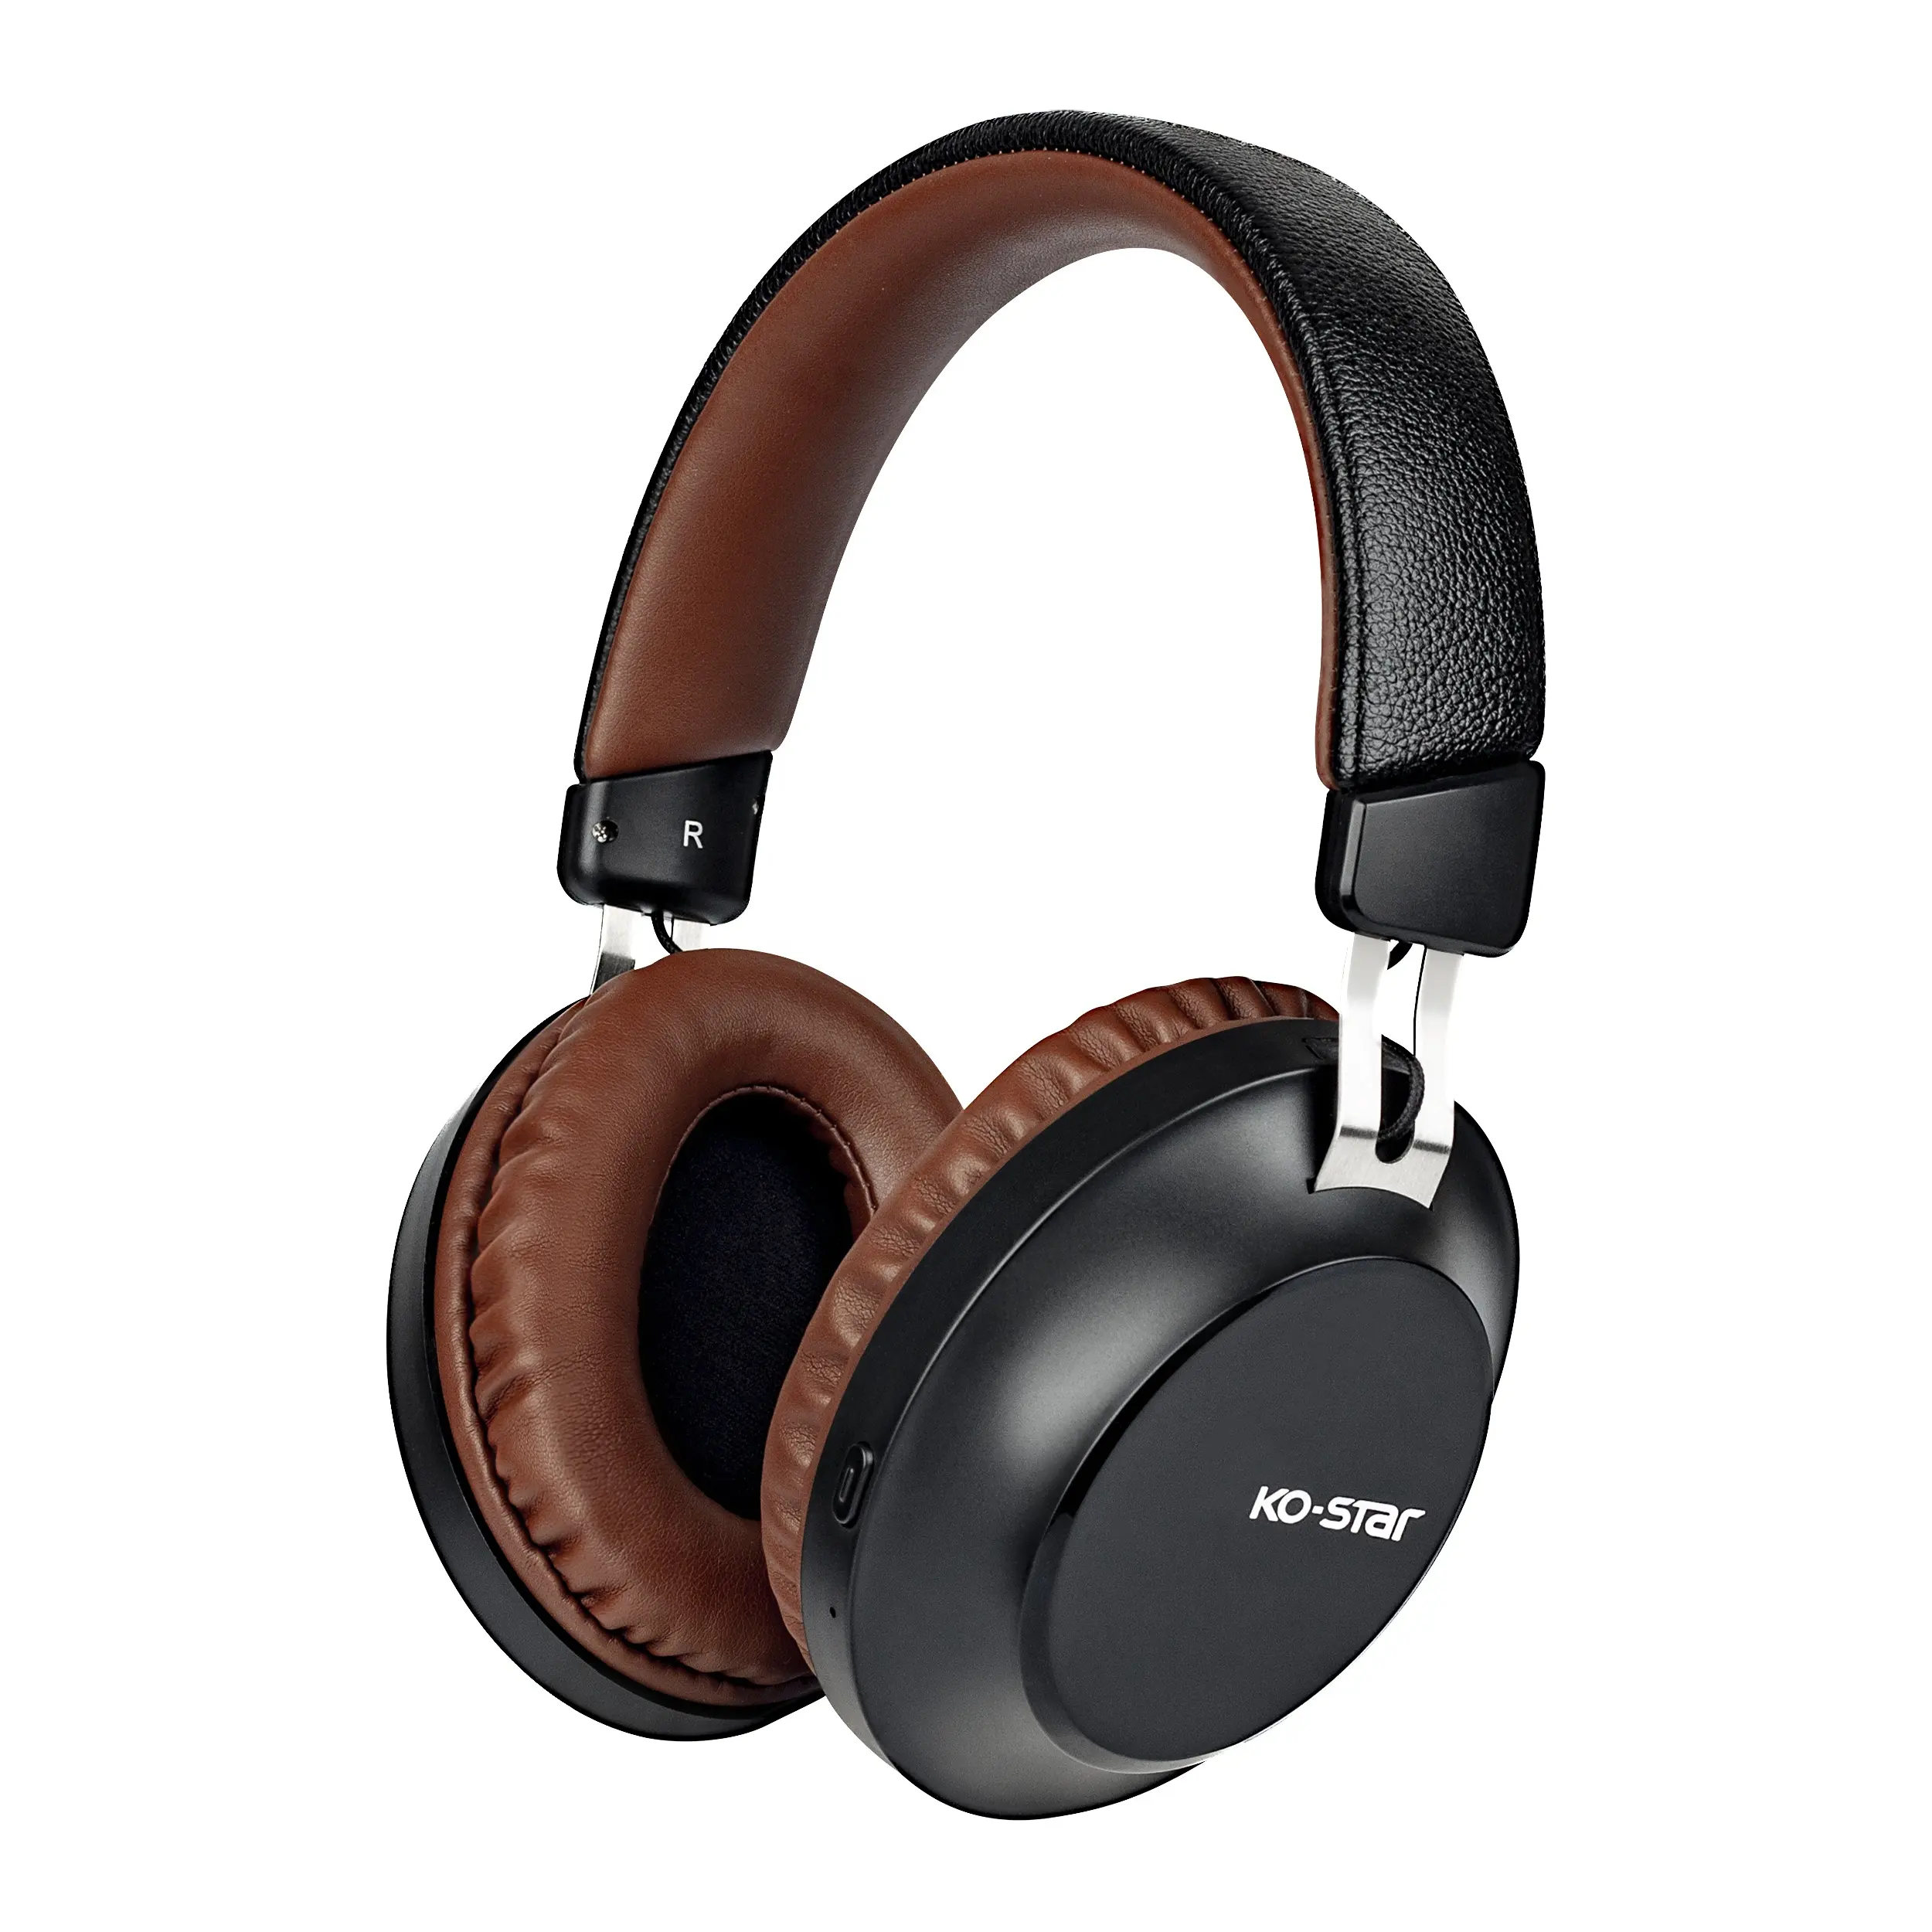 Over-ear Headphones Hybrid ANC Headphones Foldable Lightweight Best Quality Wireless Earphone